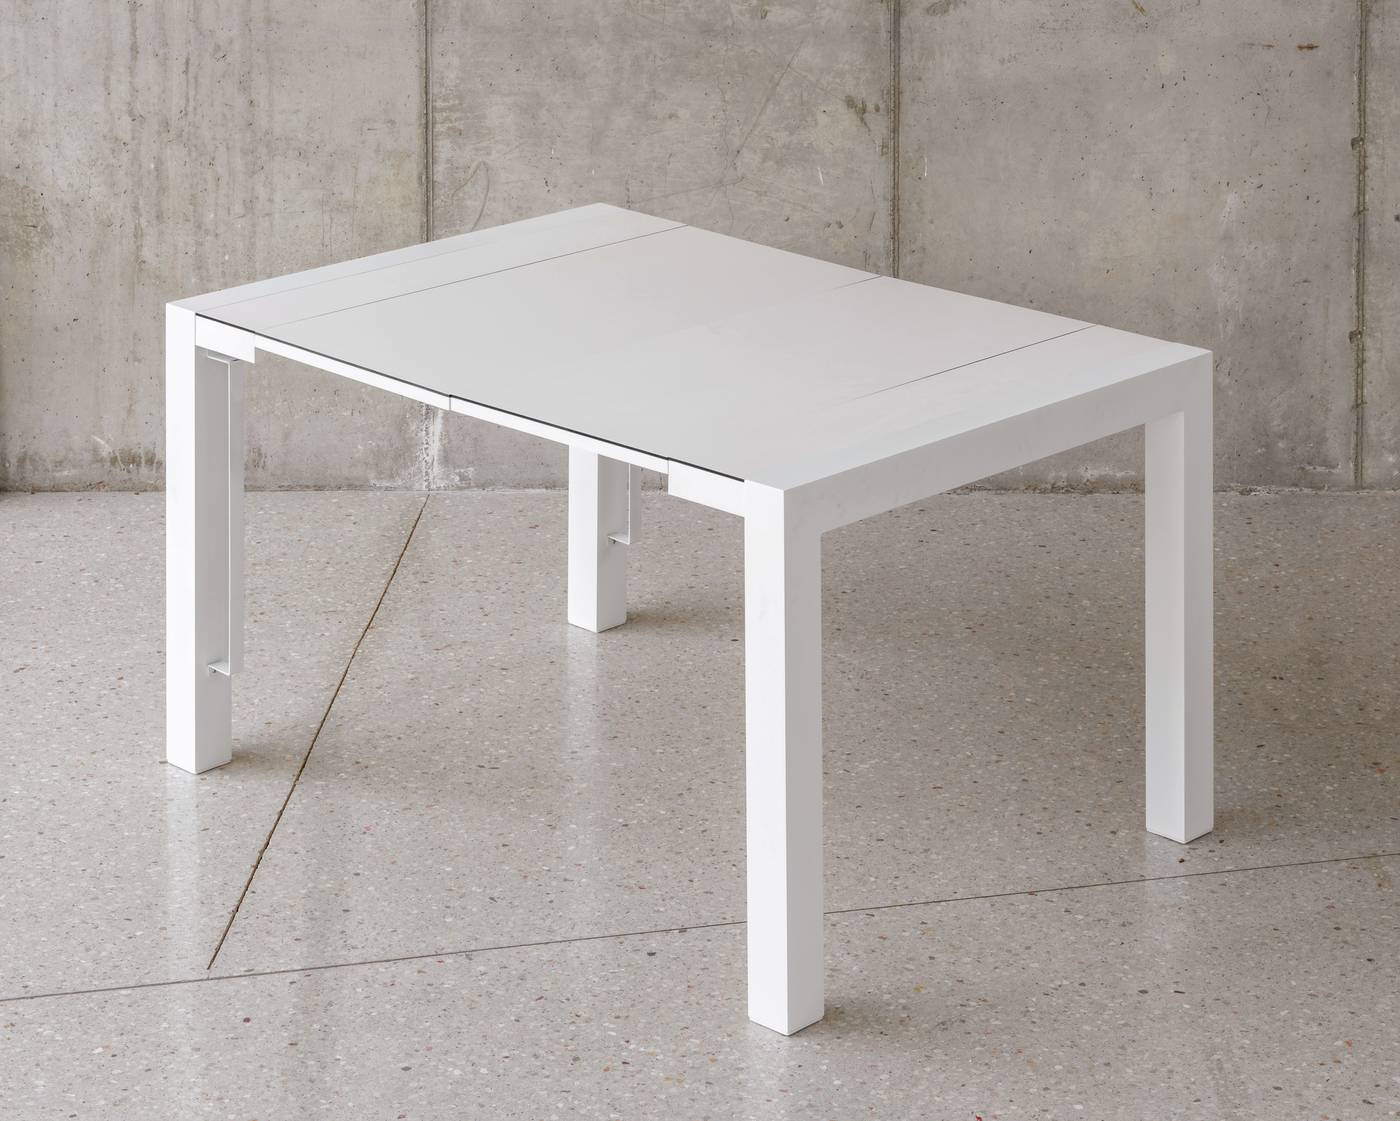 Set Aluminio LimaExt-Córcega 150-4 - Conjunto de aluminio: mesa extensible con tablero HPL + 4 sillones de textilen. Disponible en color blanco o antracita.